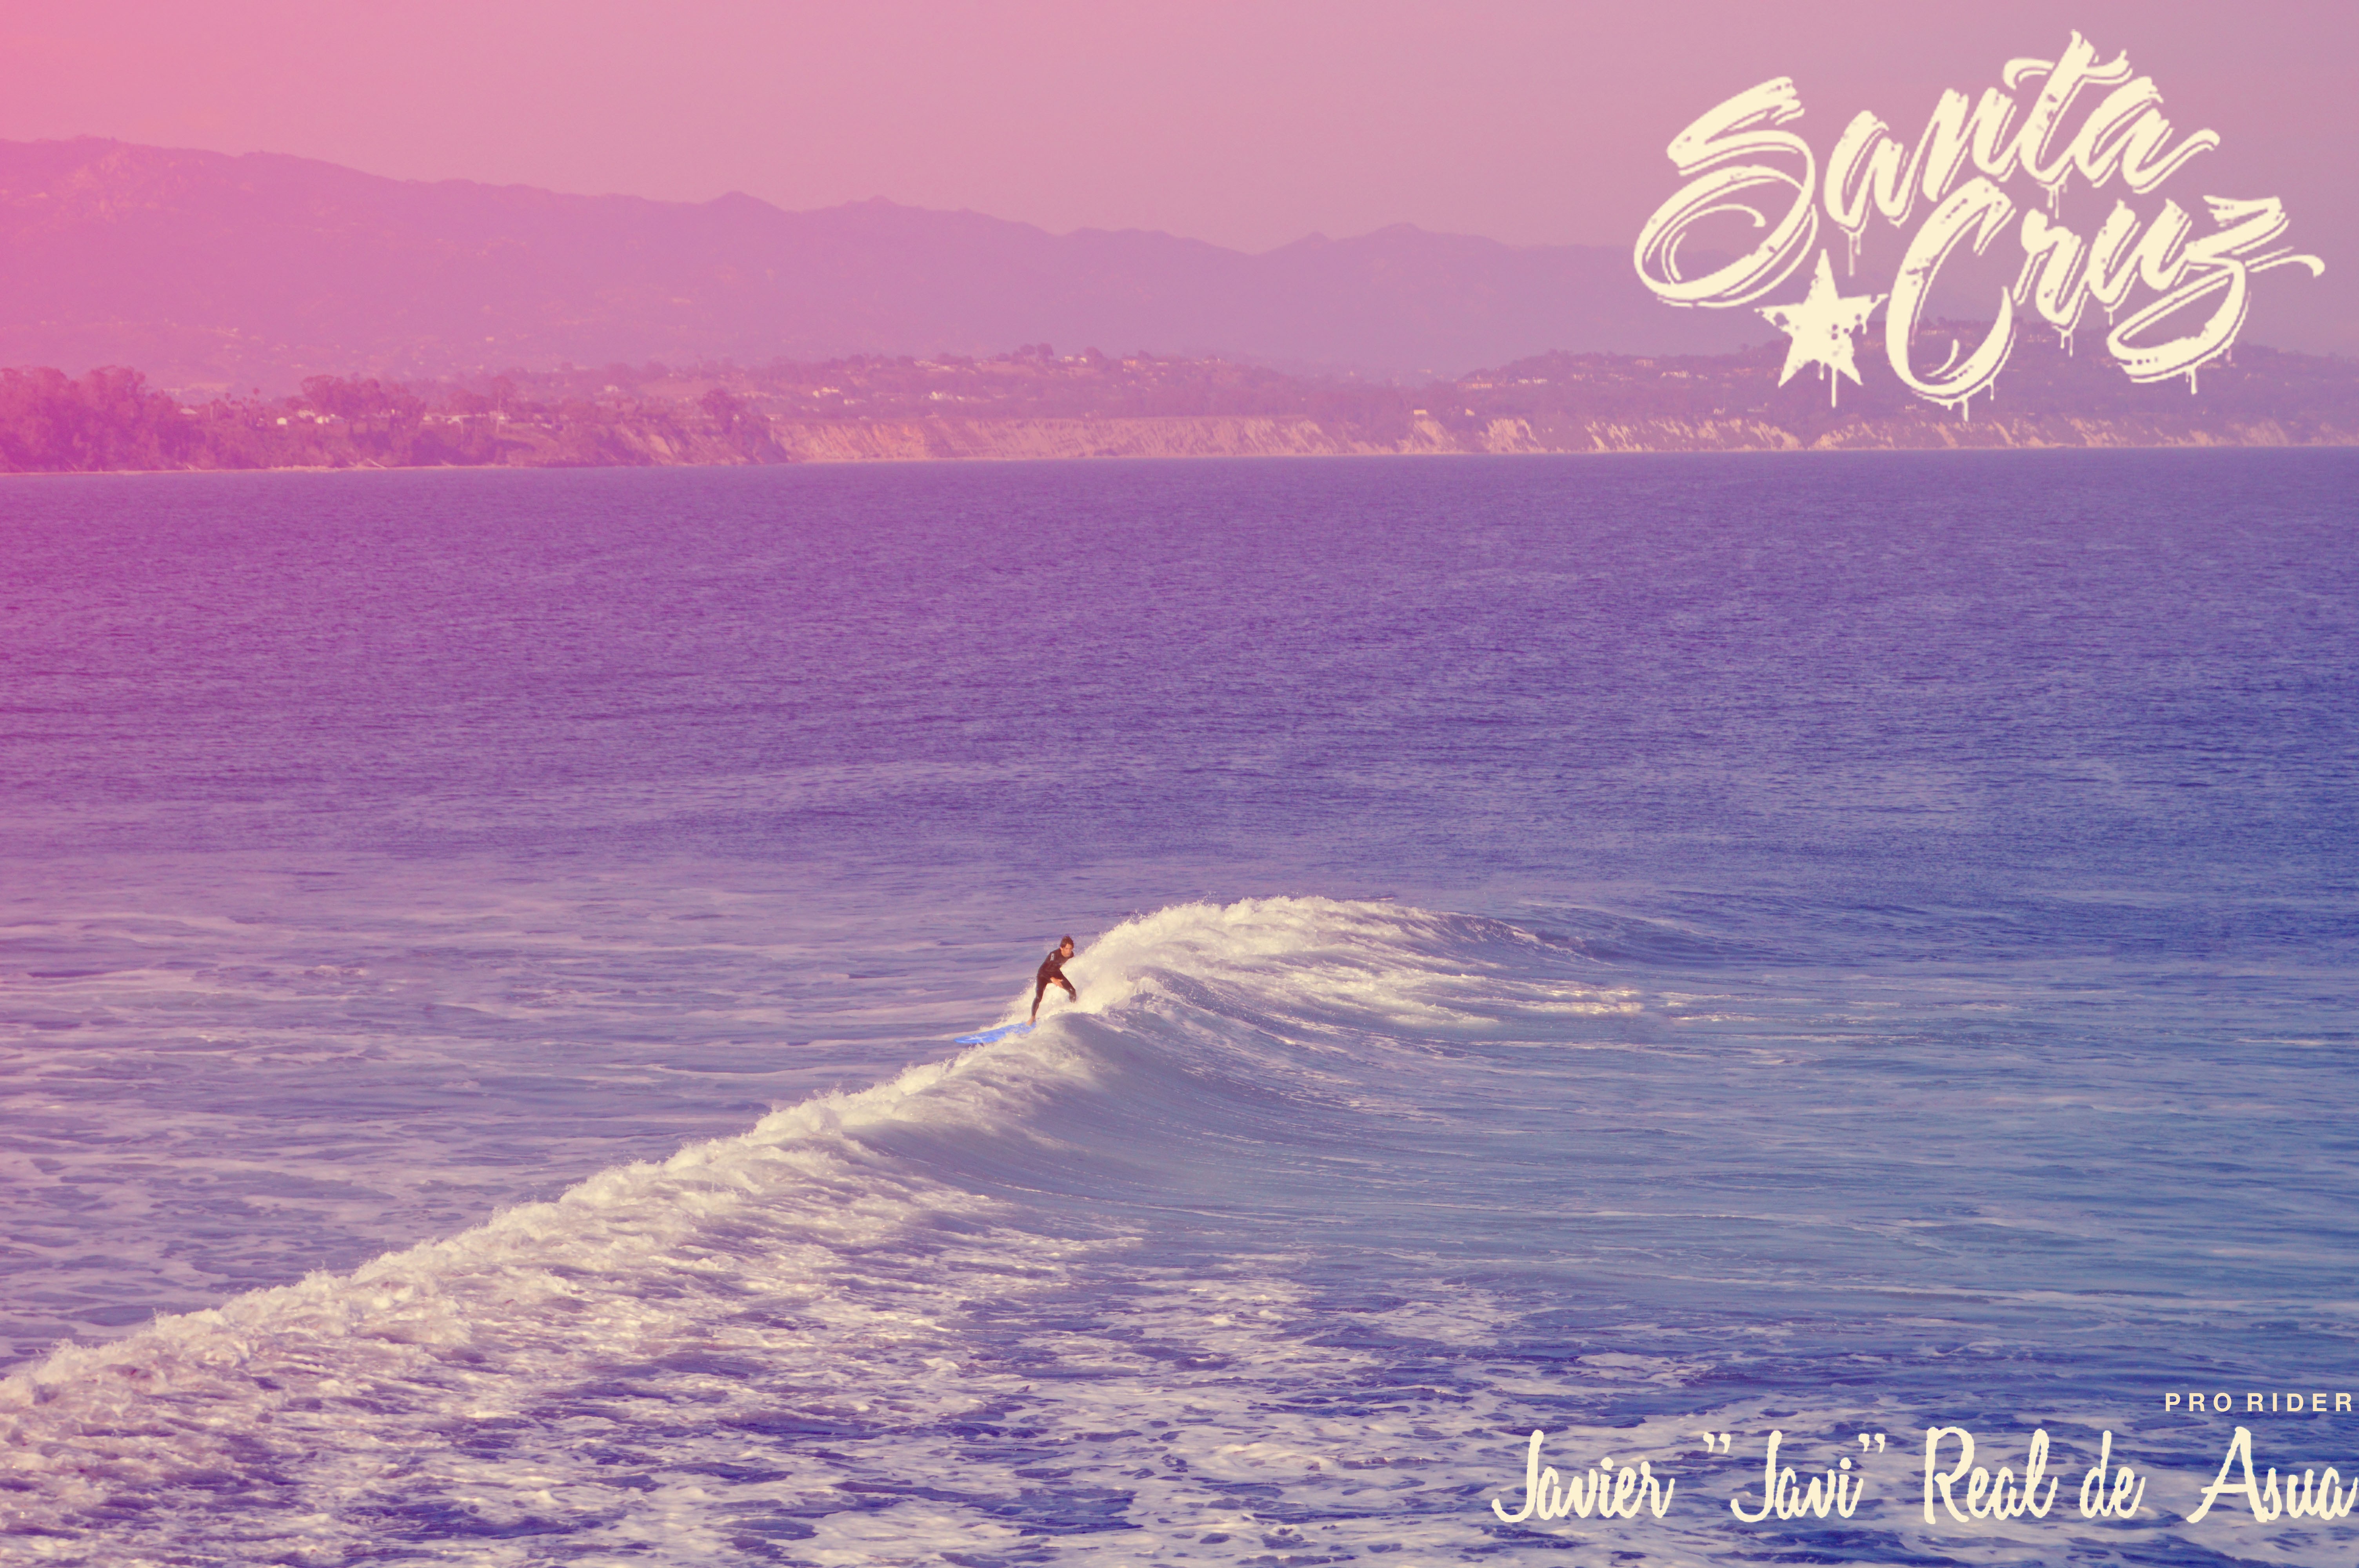 Filter Photoshop Surfing Santa Cruz California 6016x4000